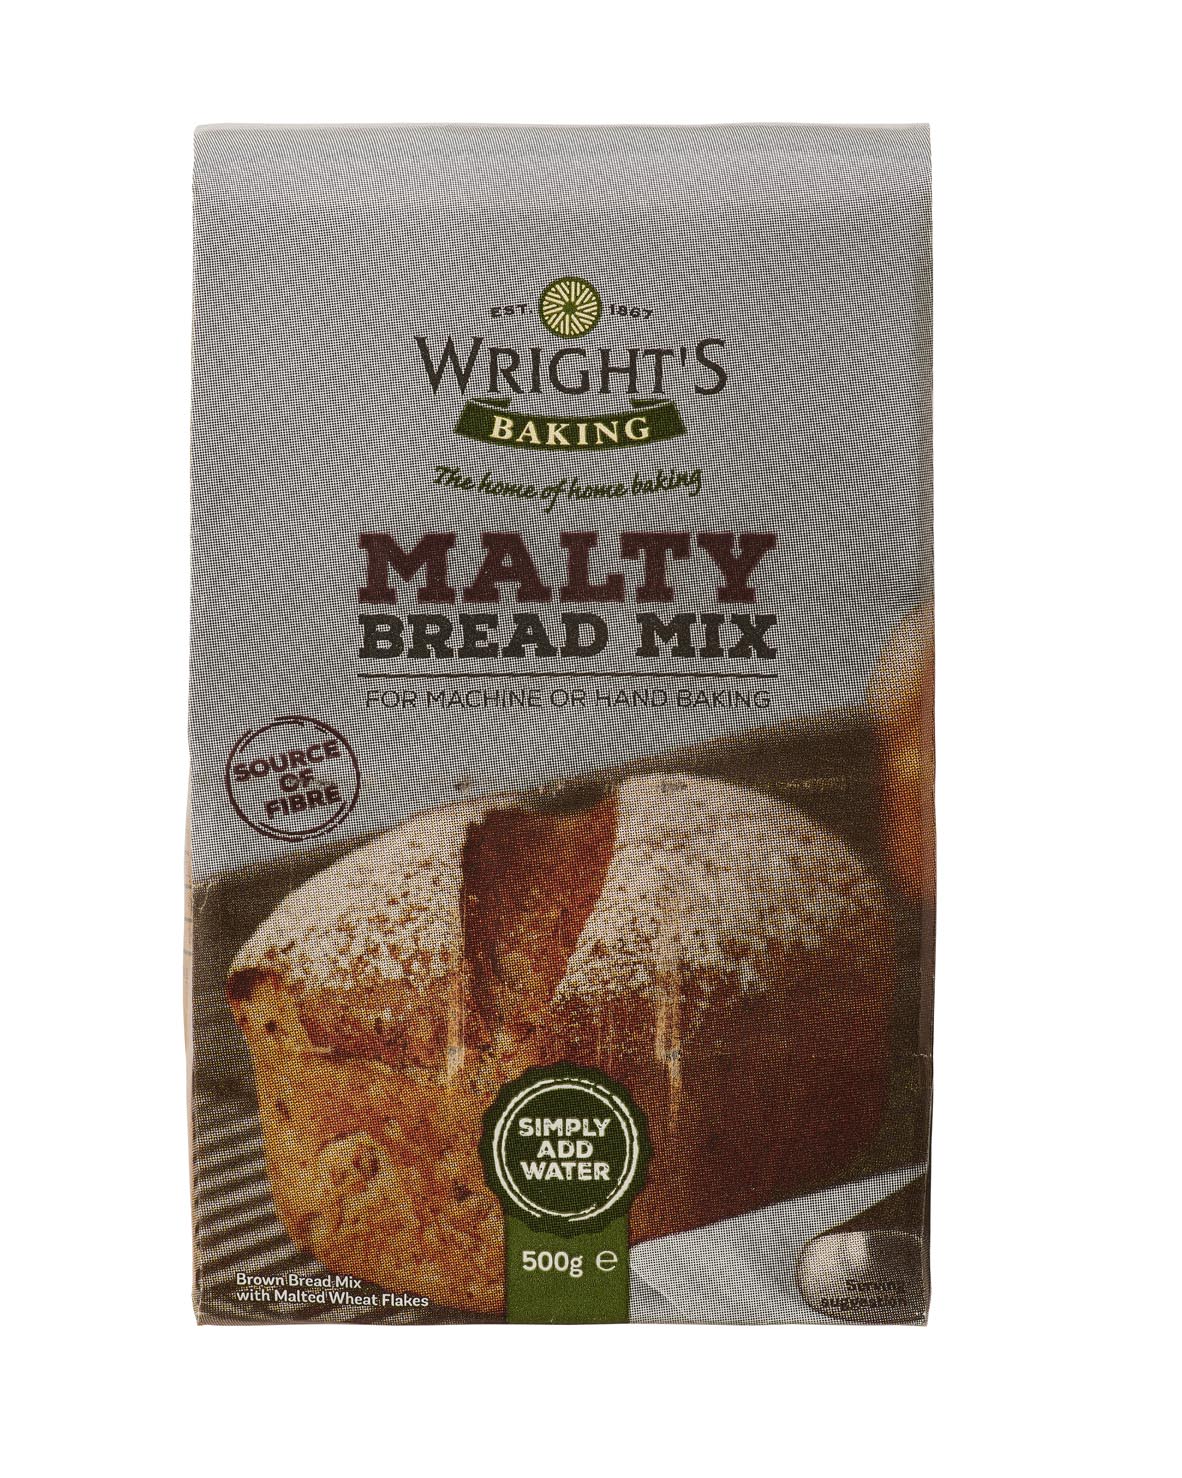 Malty Bread Mix 5 x 500g.